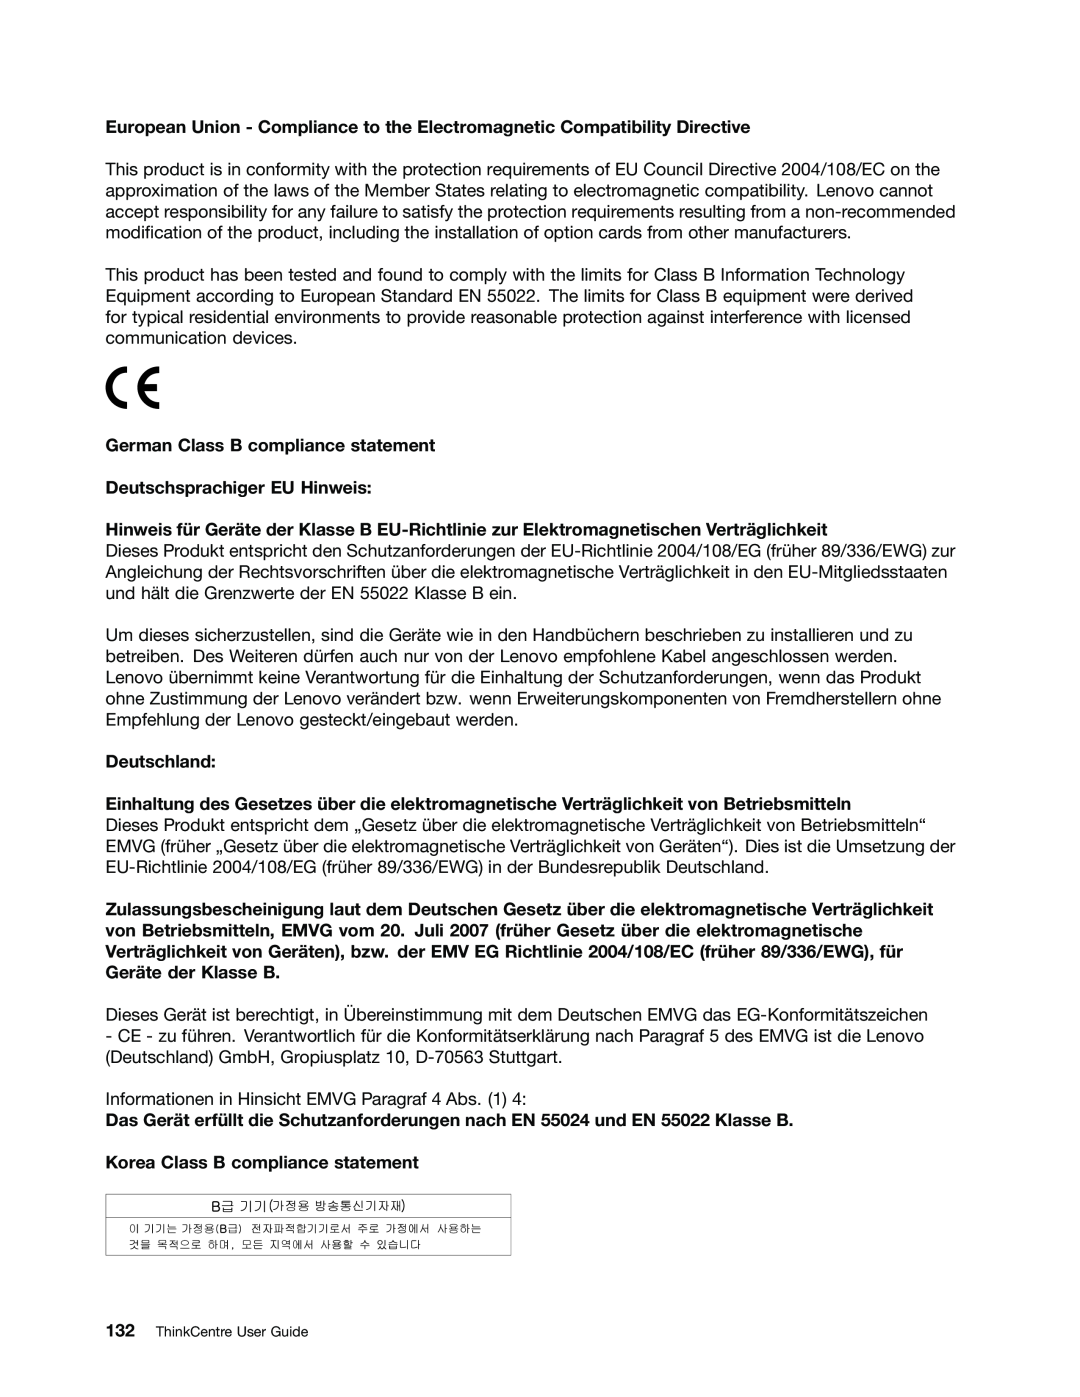 Lenovo 2996, 2988, 2992E5U, 2982, 2993, 3393 German Class B compliance statement Deutschsprachiger EU Hinweis, Deutschland 